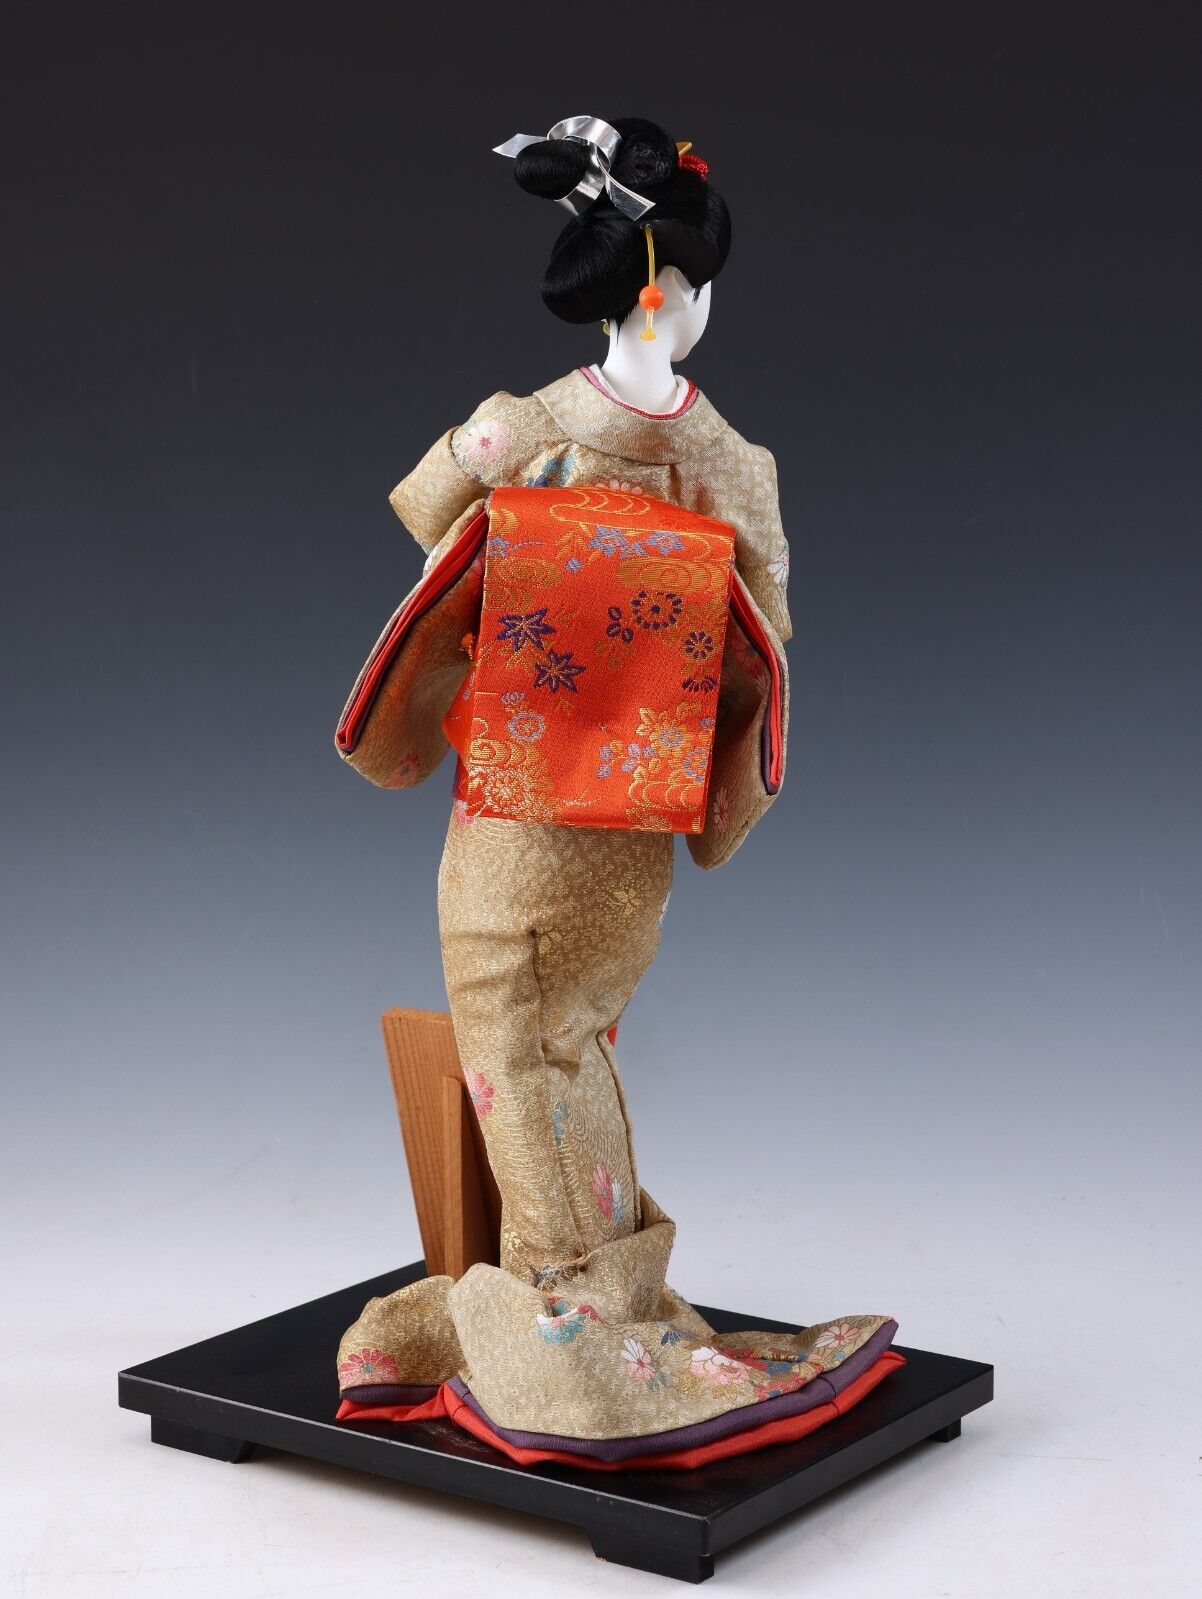 Old Japanese Traditional Geisha Doll Collectible Art Vintage Kimono and Fan.